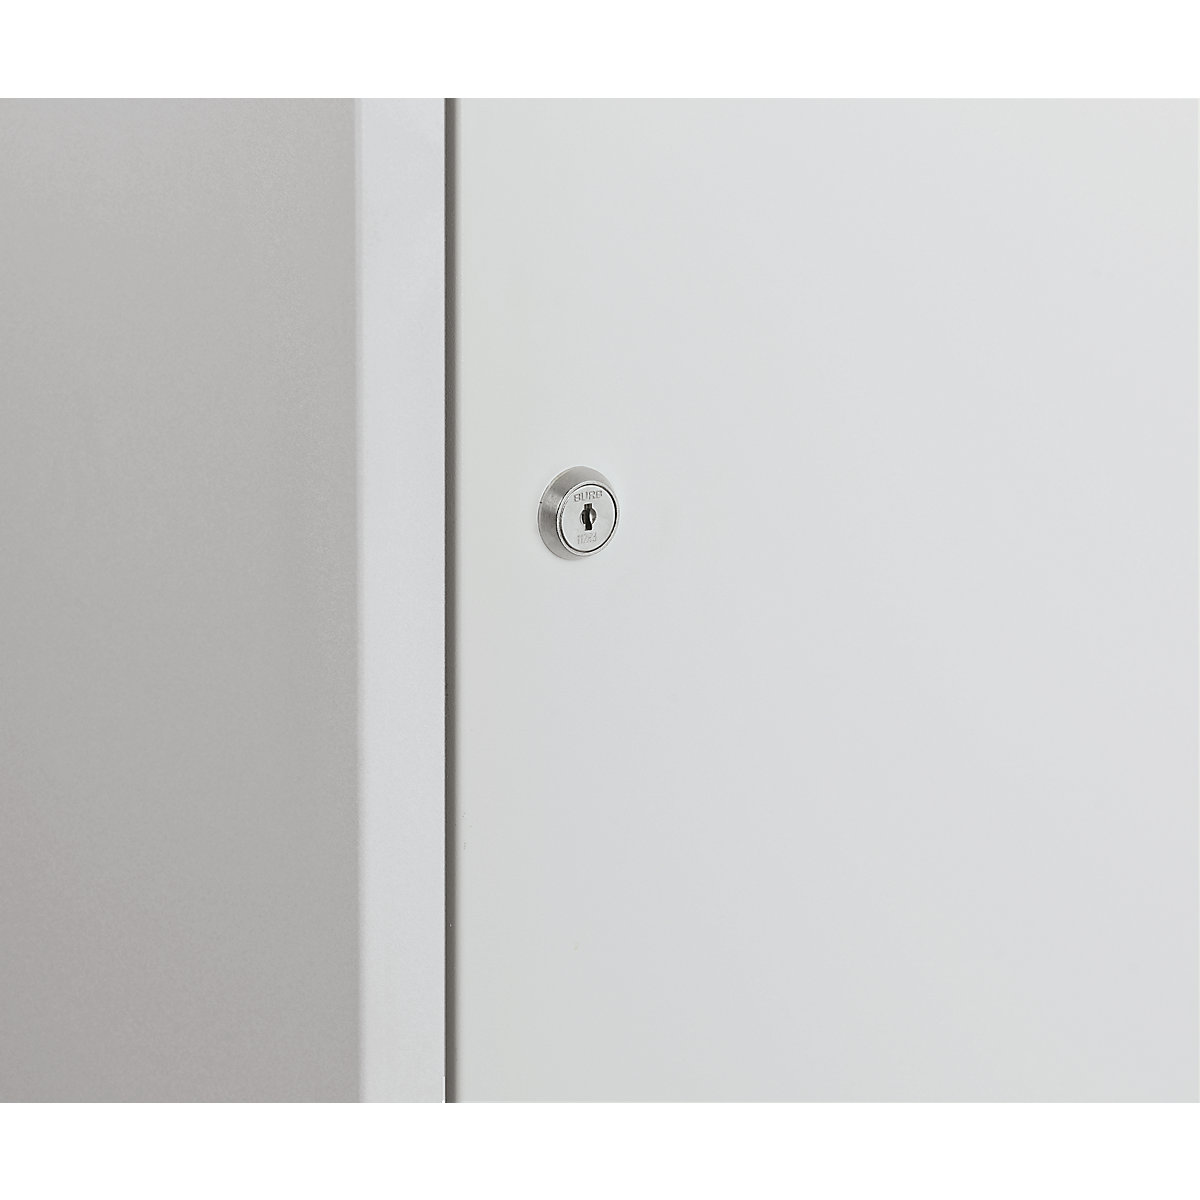 Cloakroom locker, anti bacterial